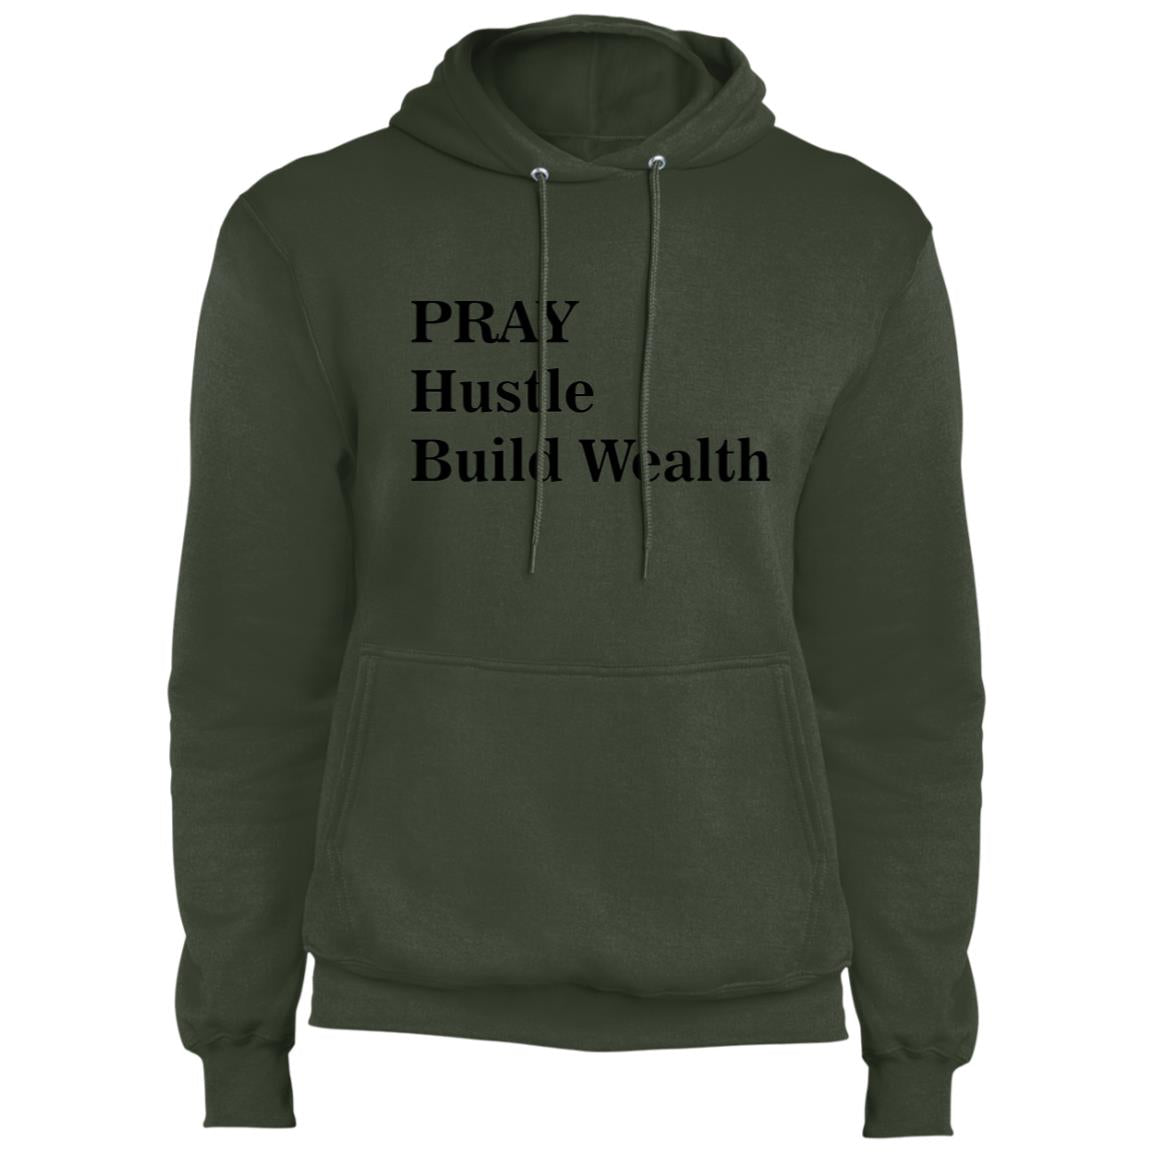 PRAY Hustle Build Wealth - Fleece Pullover Hoodie